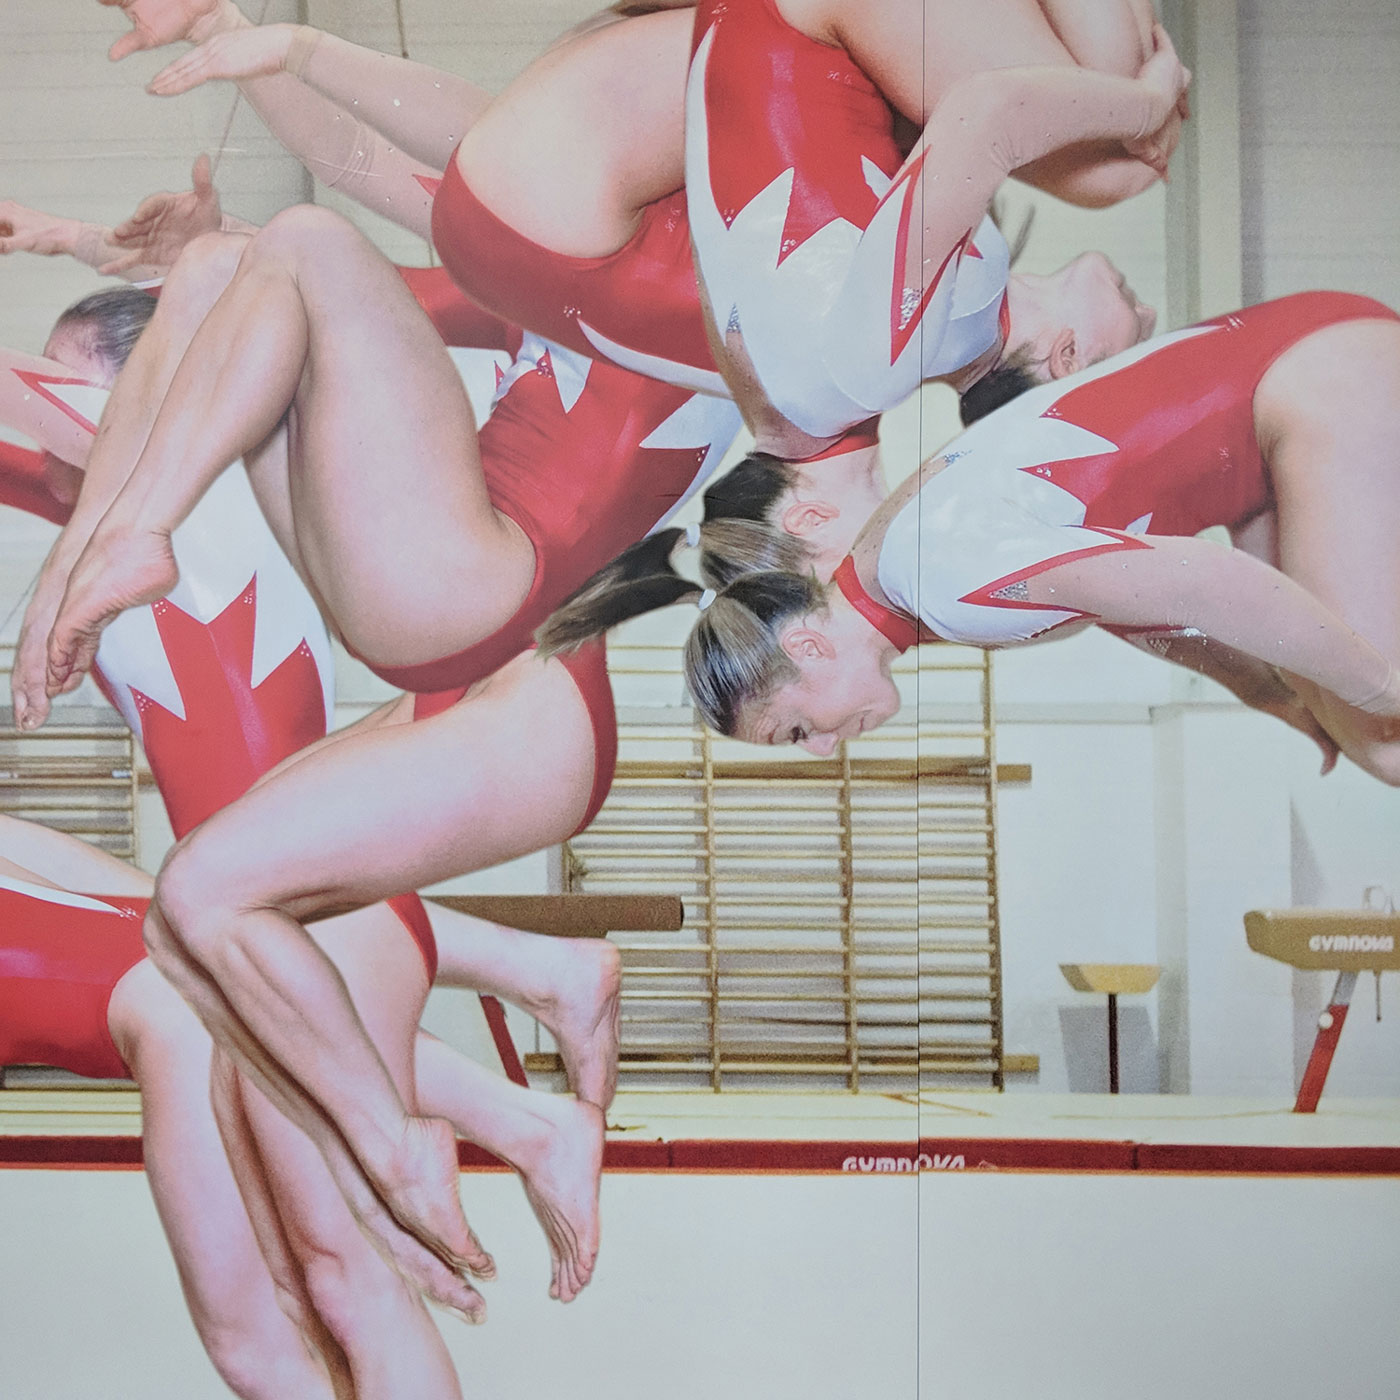 Image of Gymnast in SportsZone